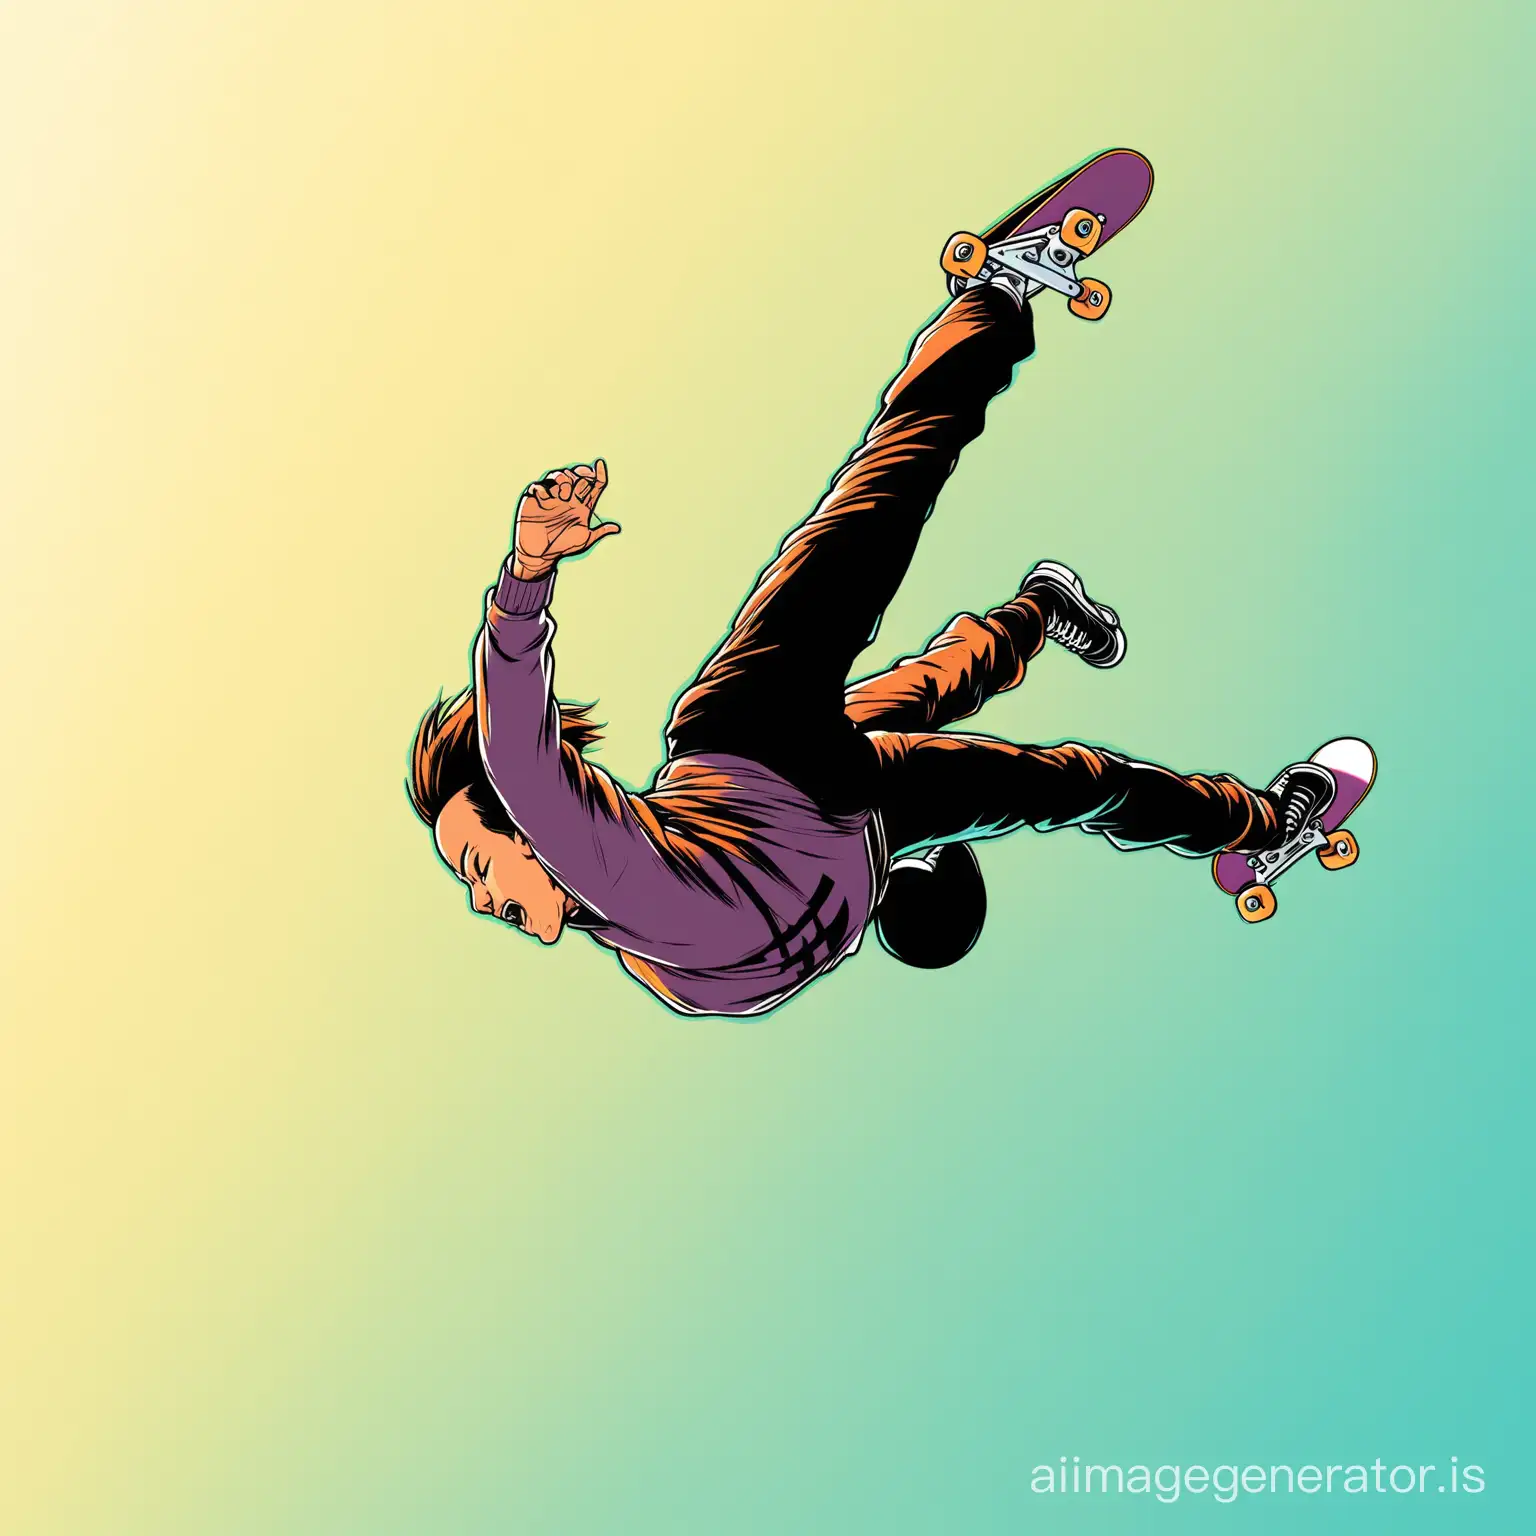 stylized image of skateboarder falling over